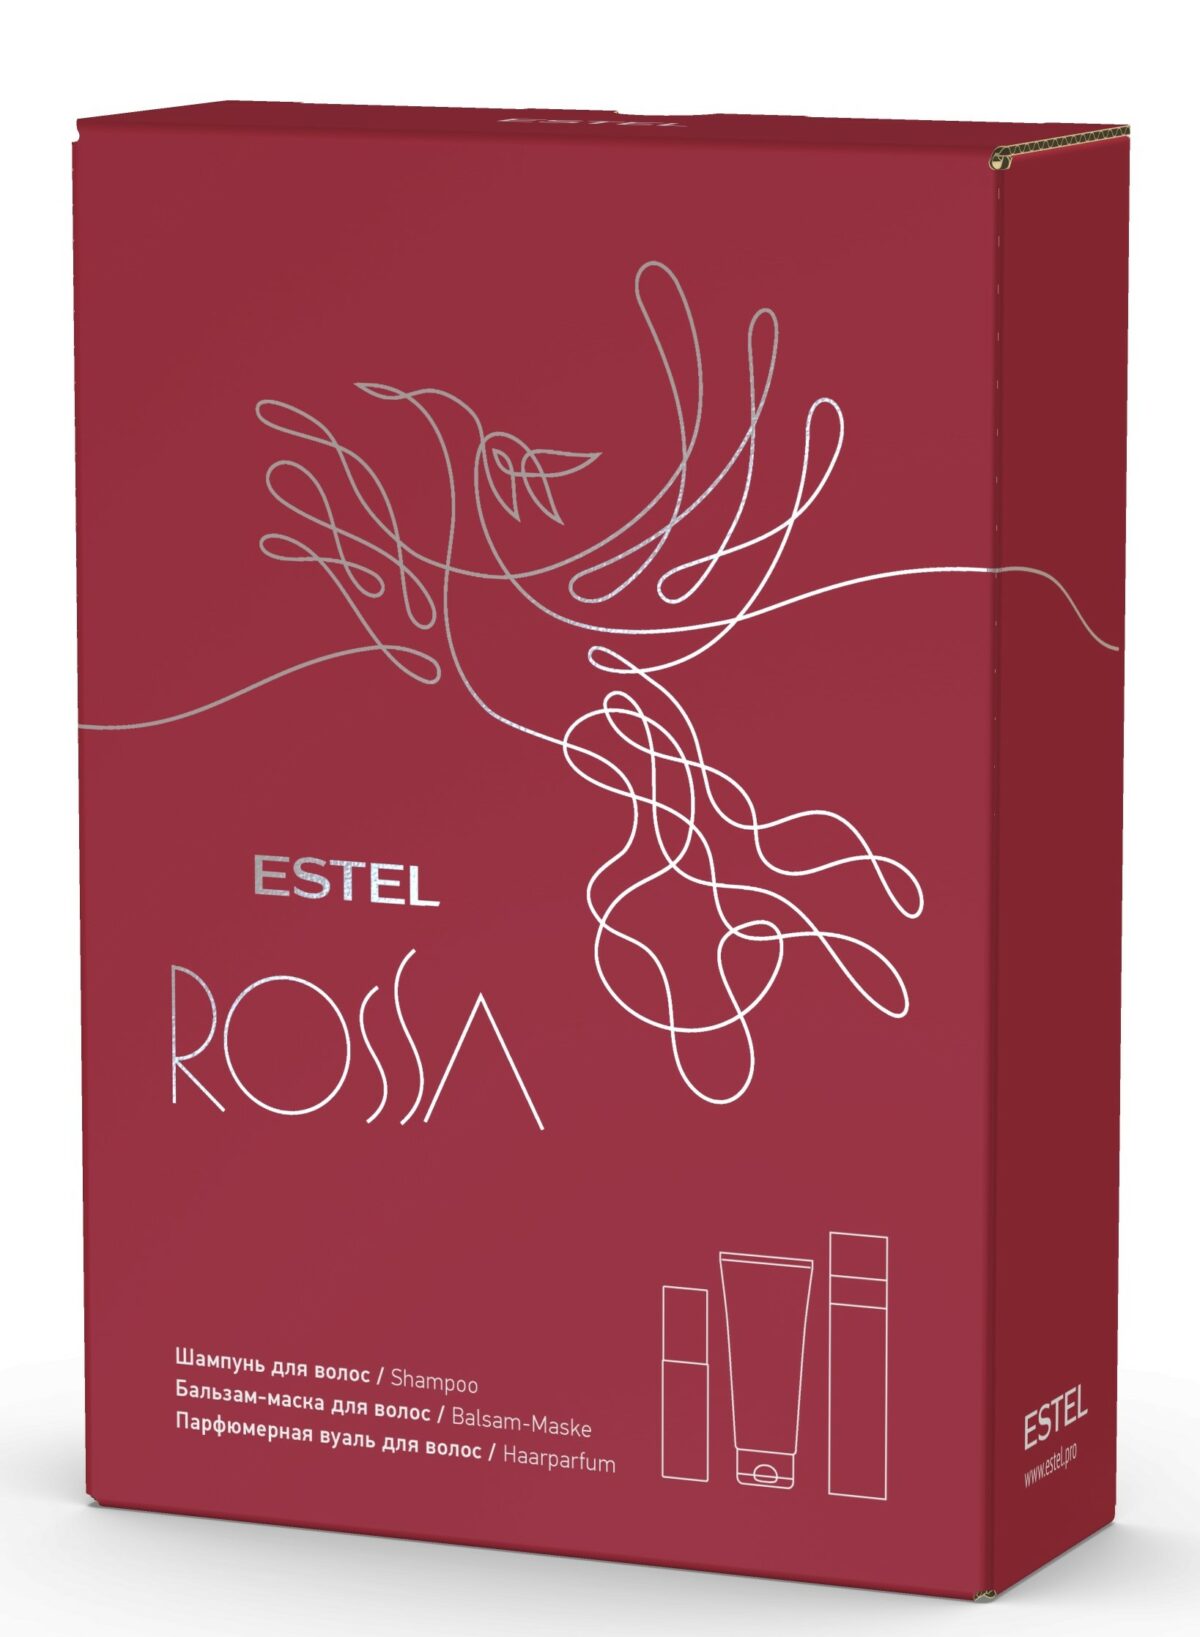 Подарочный набор Rossa: шампунь 250 мл + бальзам-маска 200 мл + парфюмерная вуаль 100 мл ESTEL